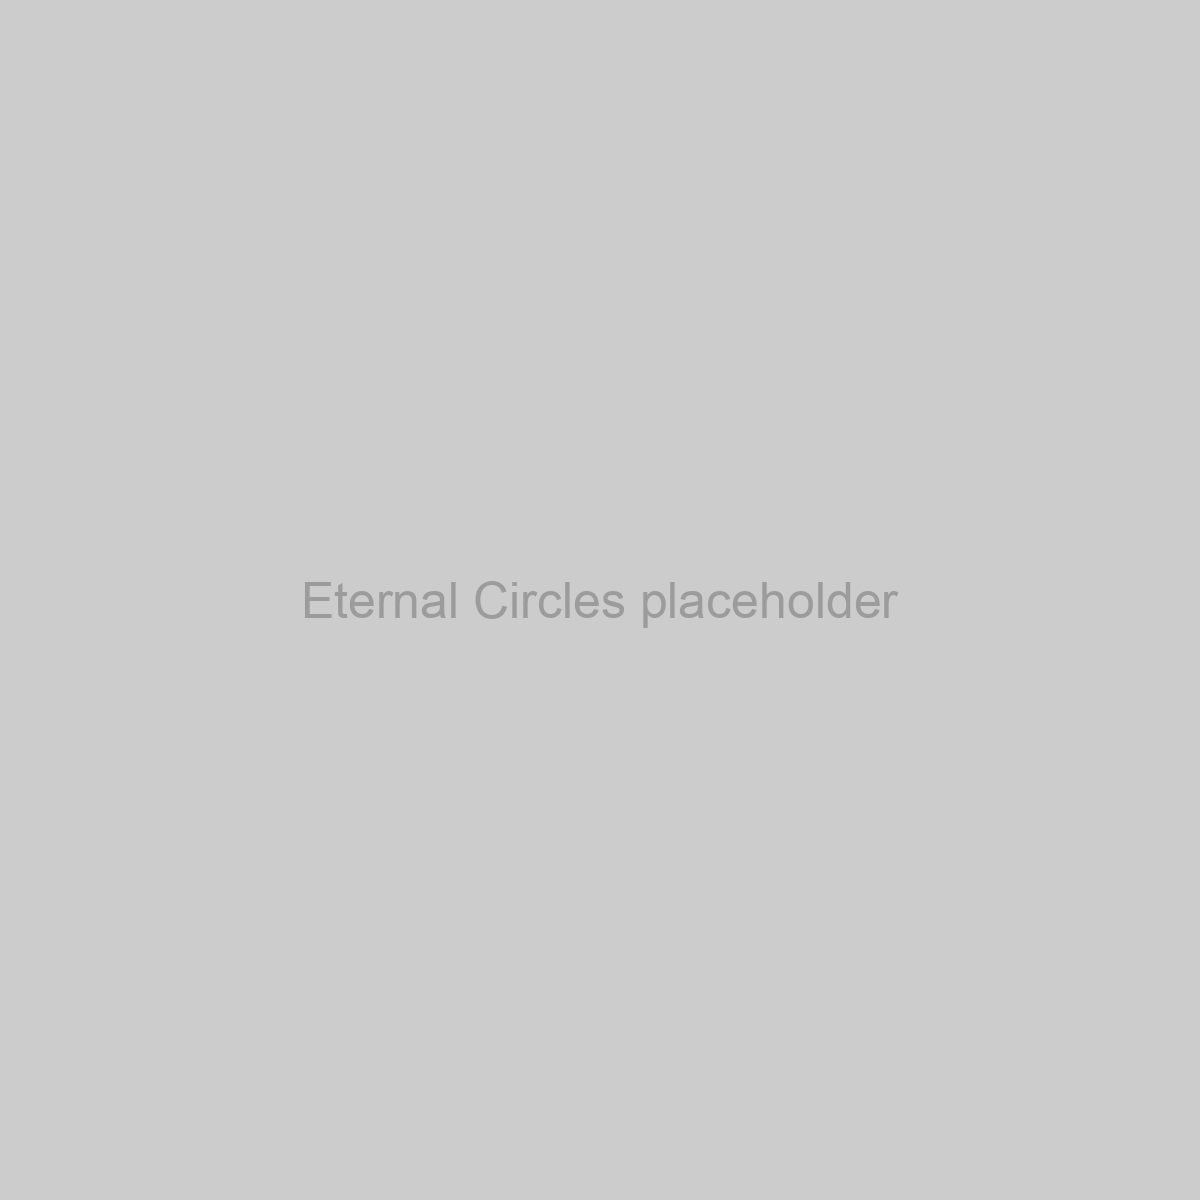 Eternal Circles Placeholder Image